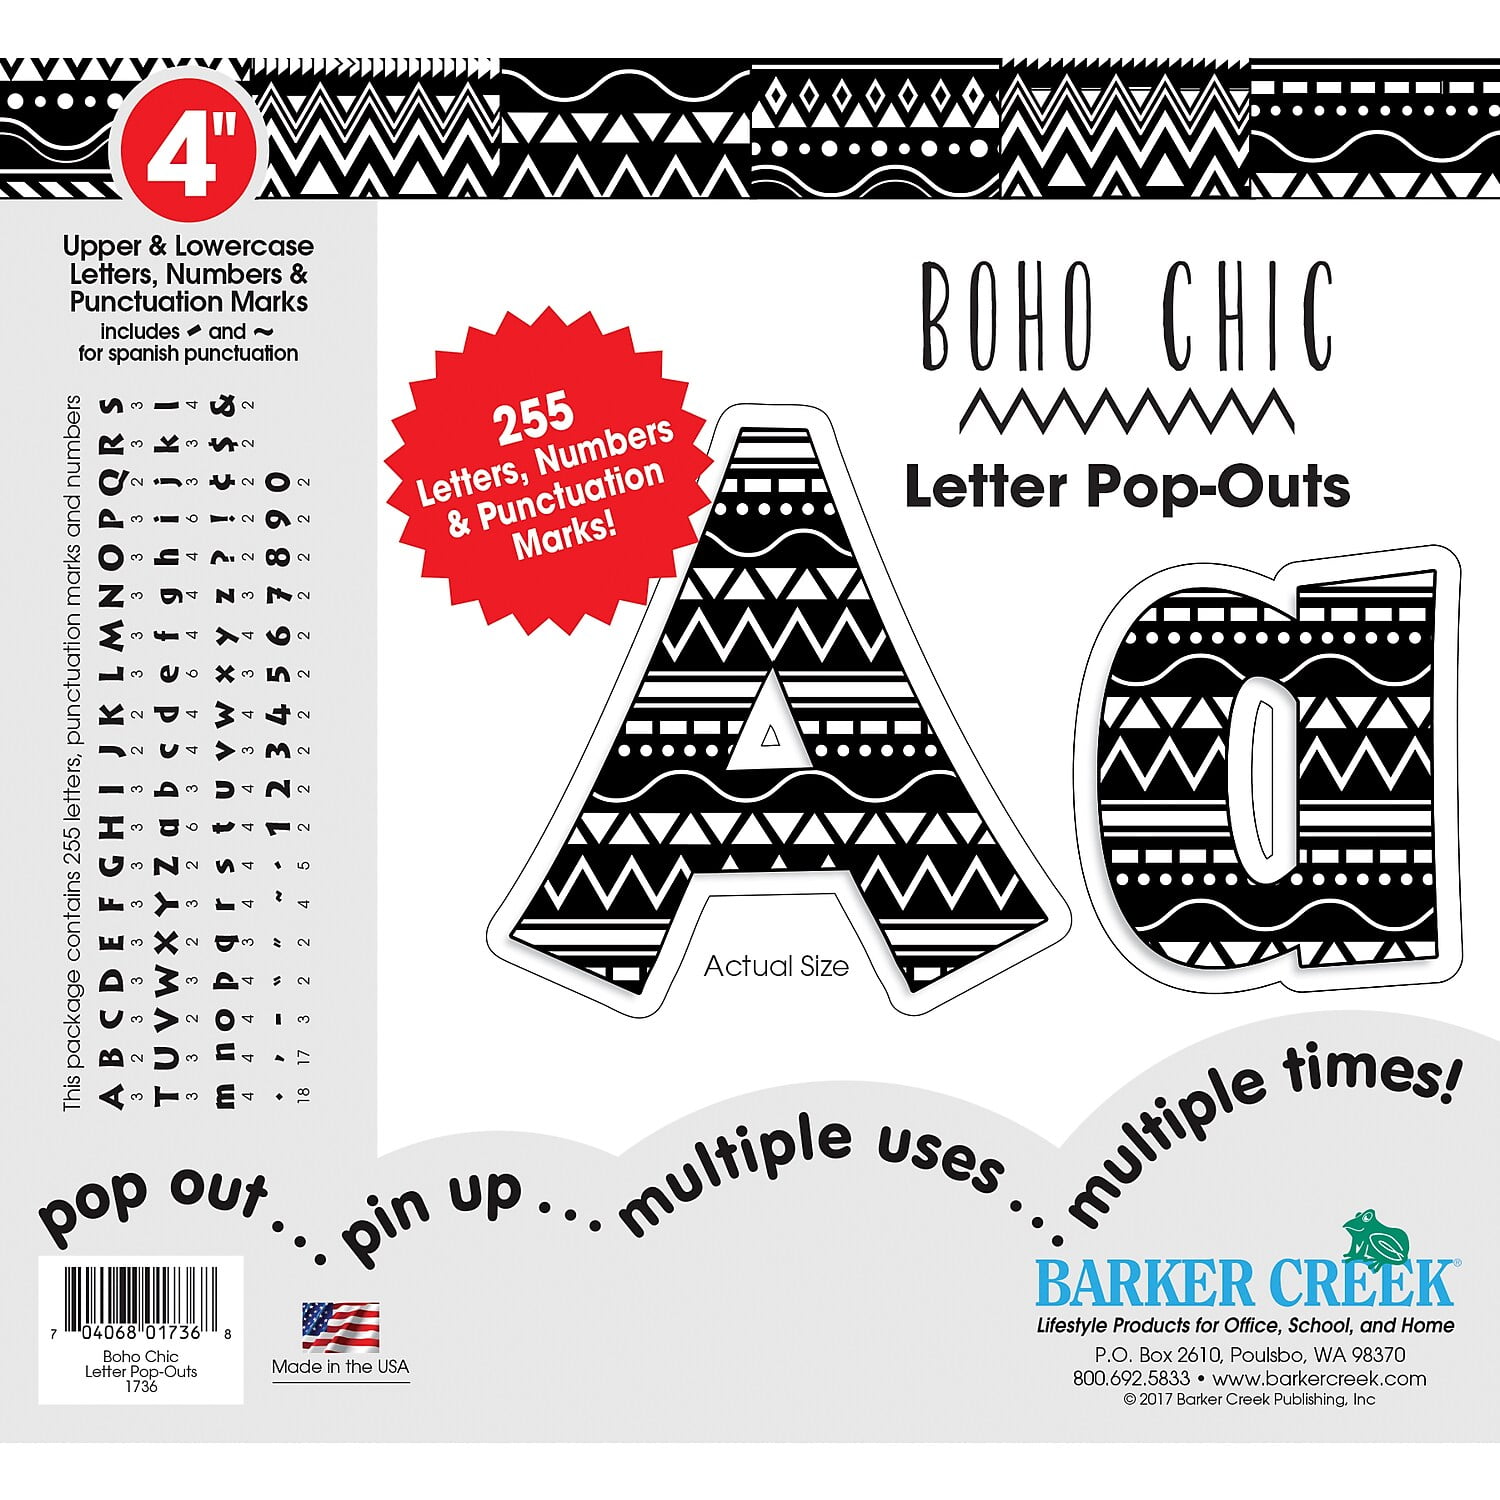 Glitter Cursive Alphabet Letter Stickers, 1-Inch, 50-Count Black